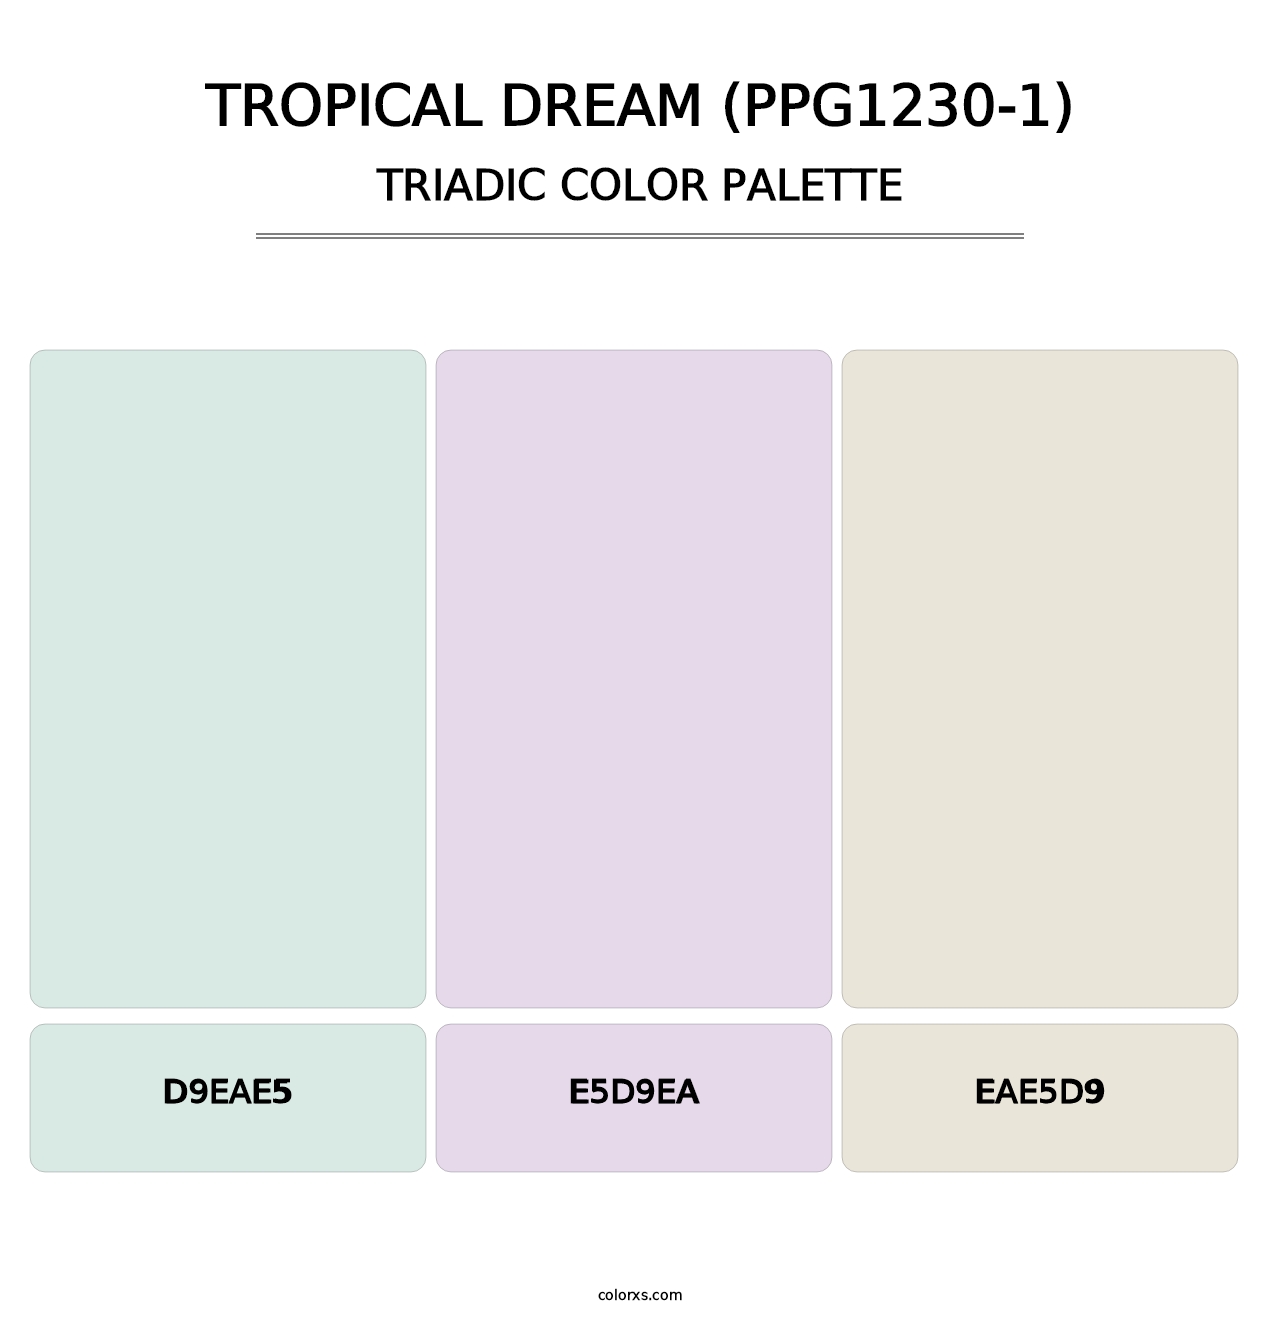 Tropical Dream (PPG1230-1) - Triadic Color Palette